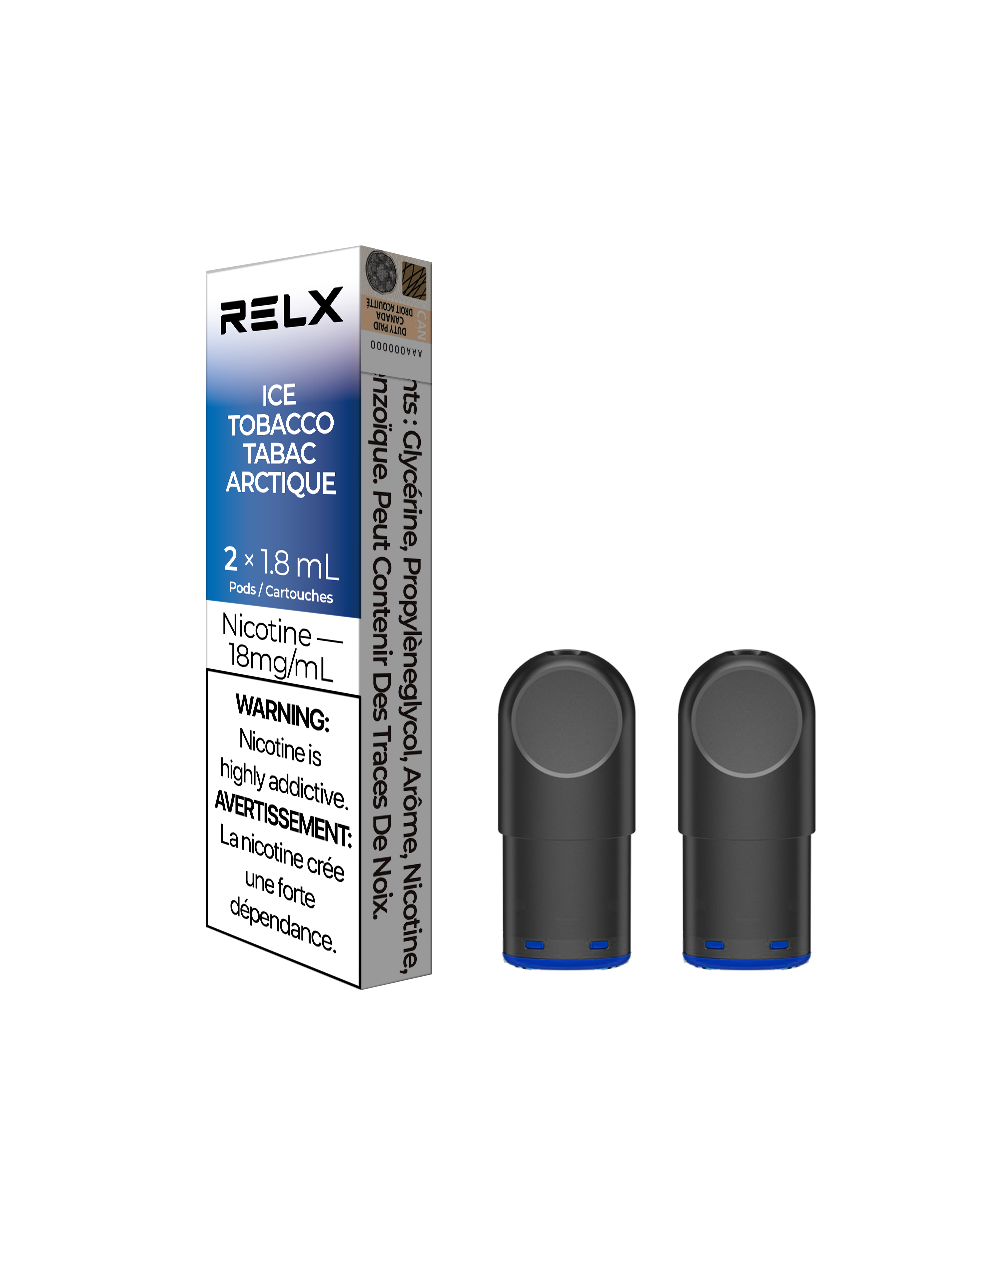 RELX - Pro Pod